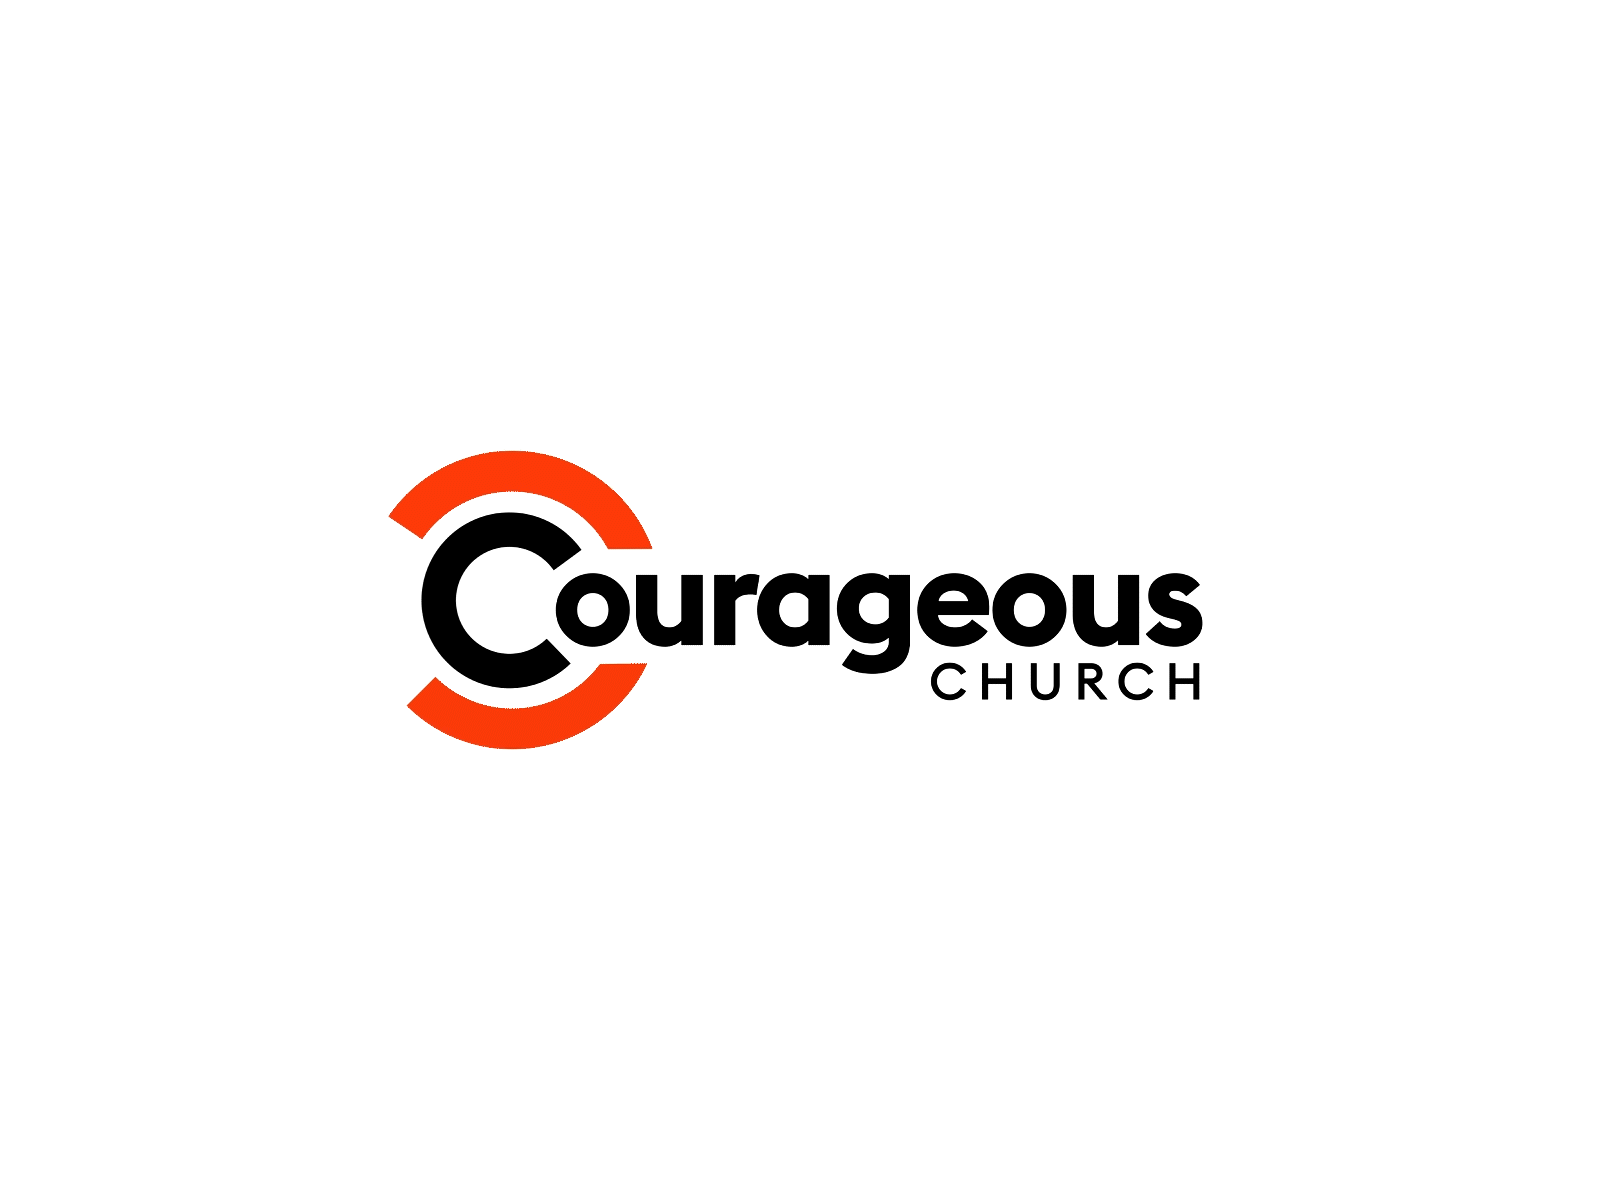 Courageous Church Logo Animation animatedlogo animation church courageous logo logo animation motion graphics